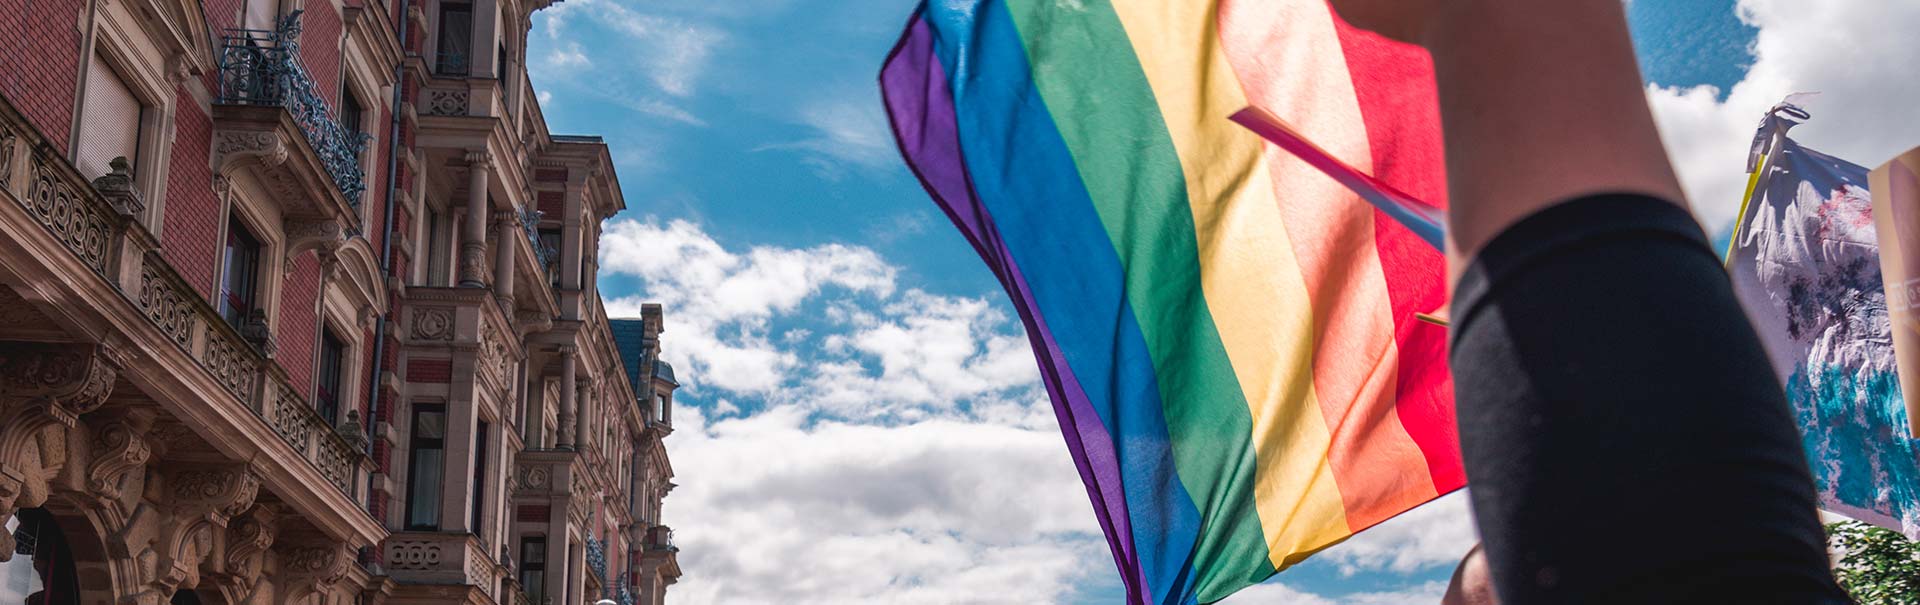 a rainbow flag flies next to a paris building